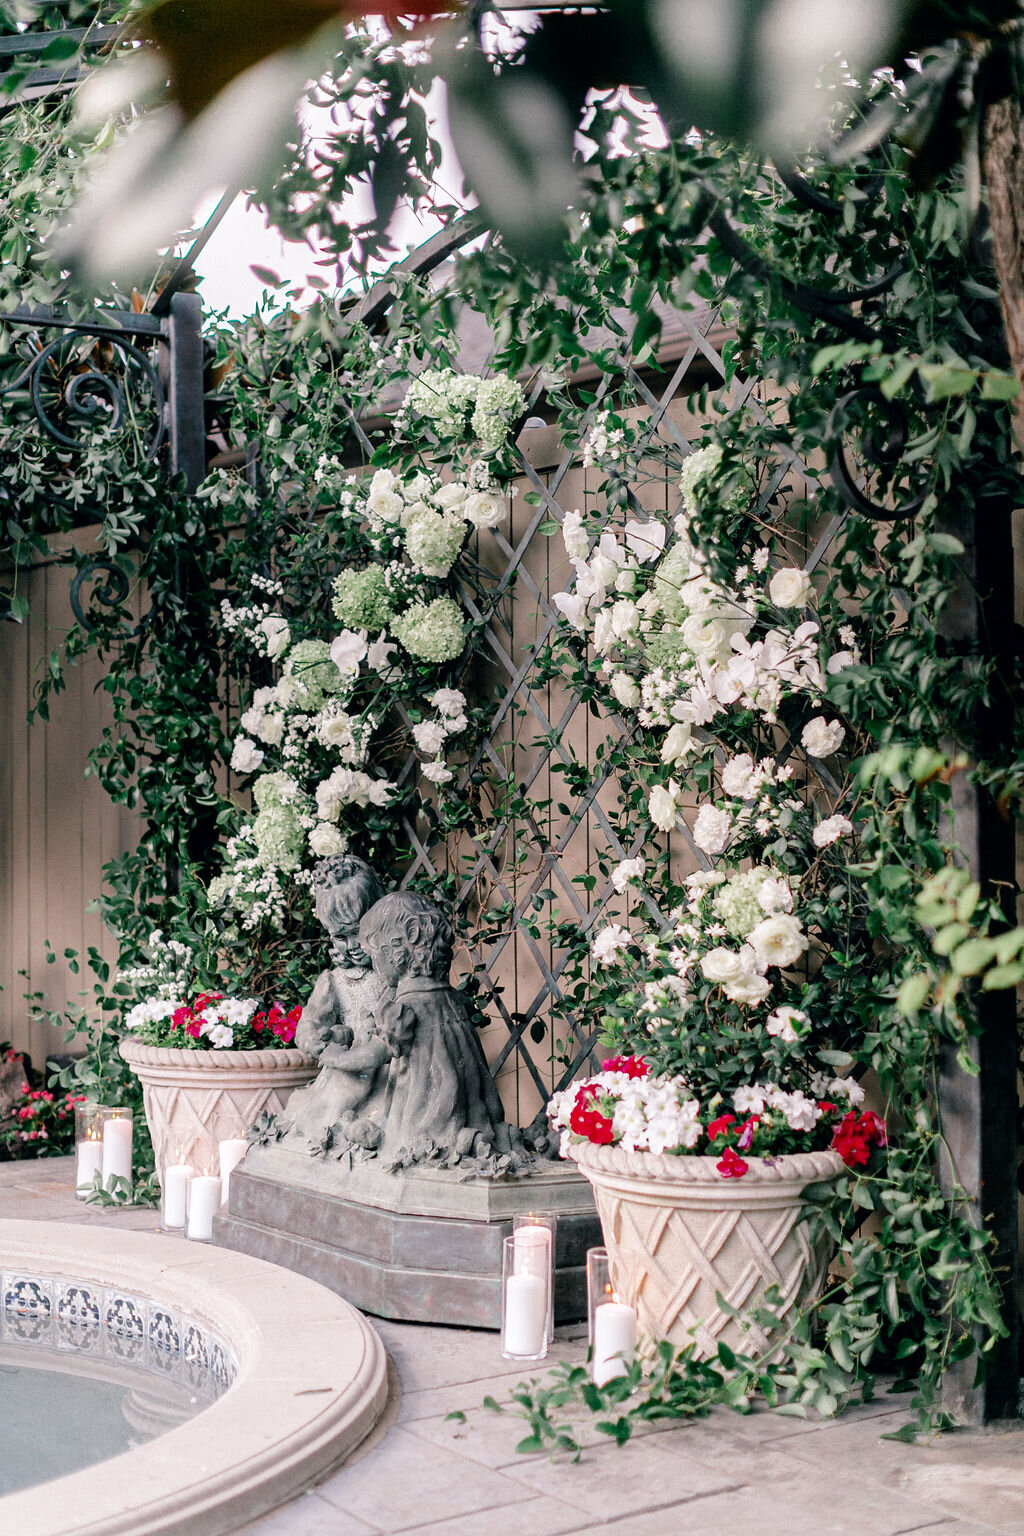 max-owens-design-at-home-floral-arrangements-13-garden-trellis